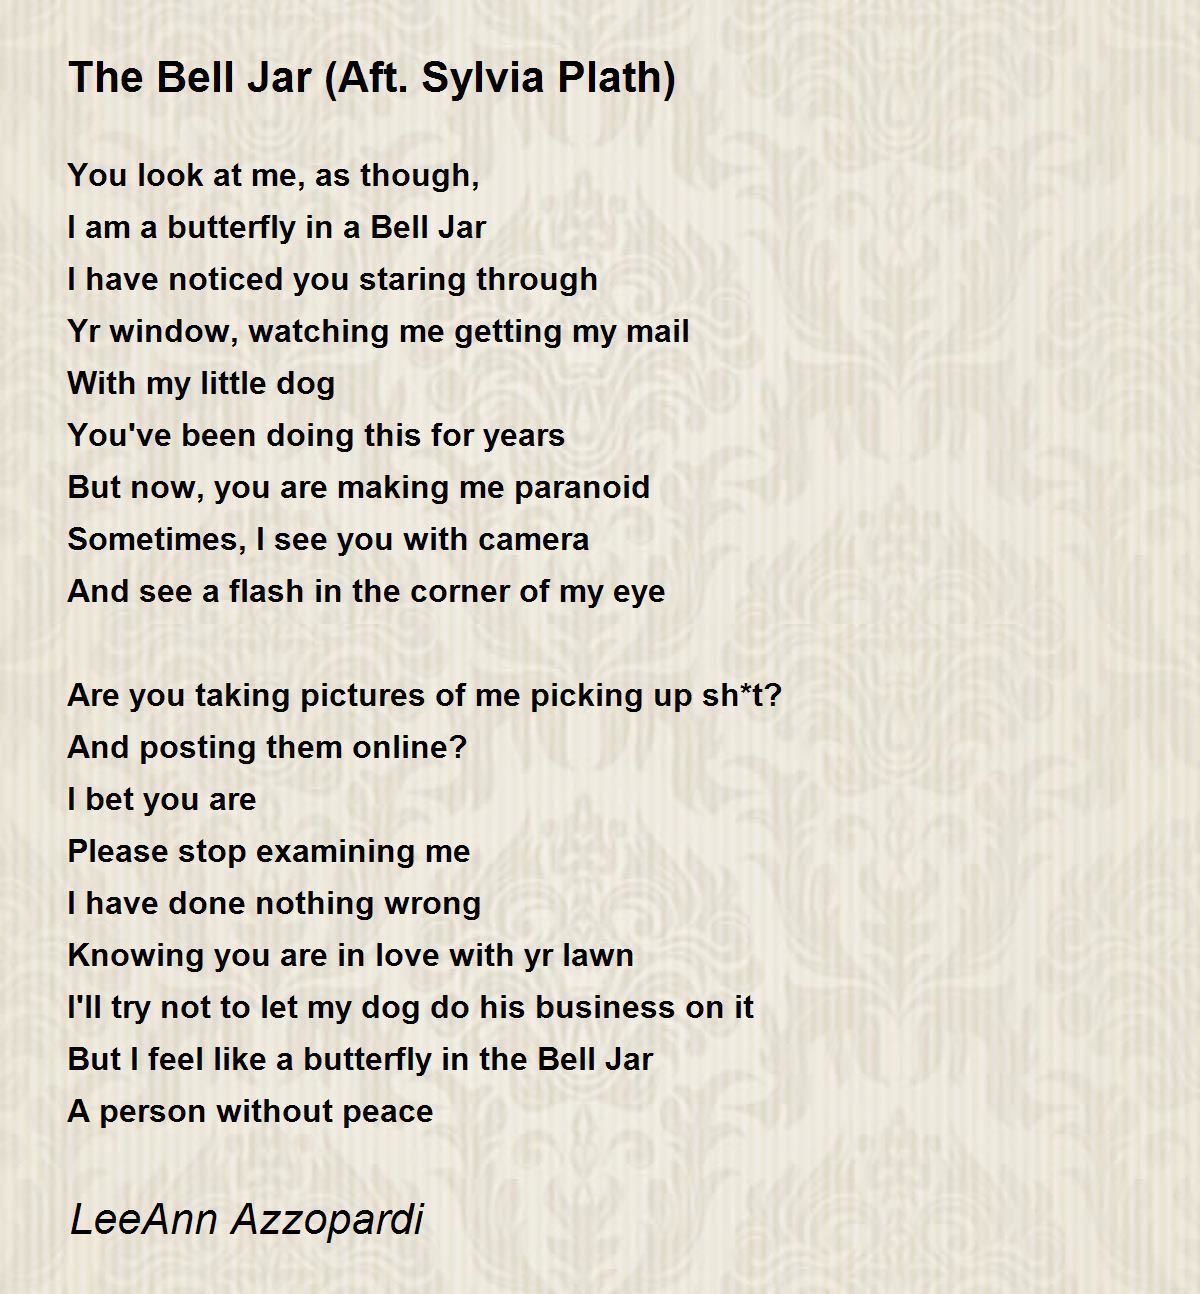 sylvia plath poems